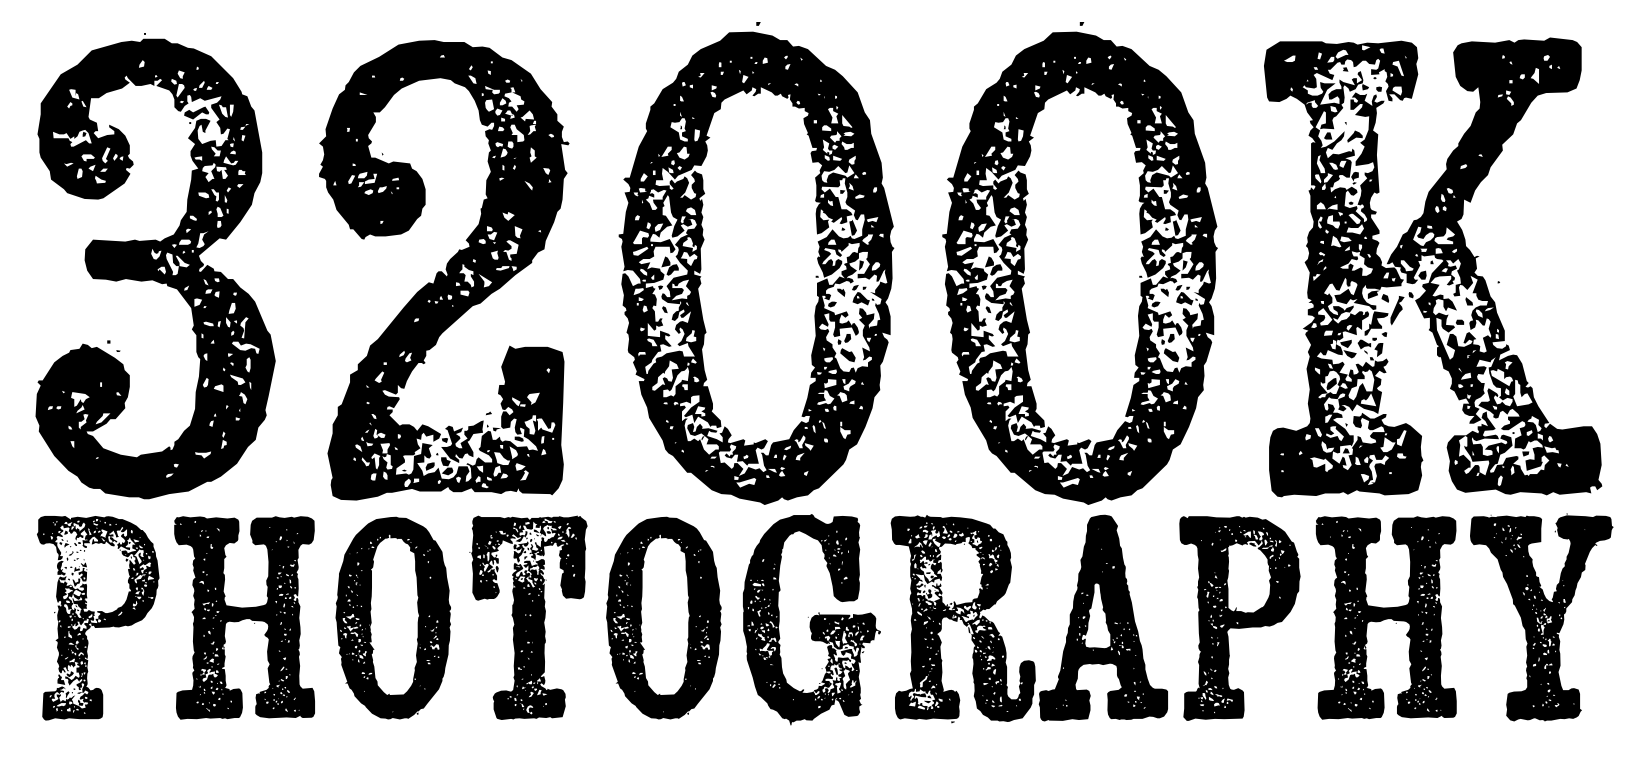 3200K PHOTOGRAPHY